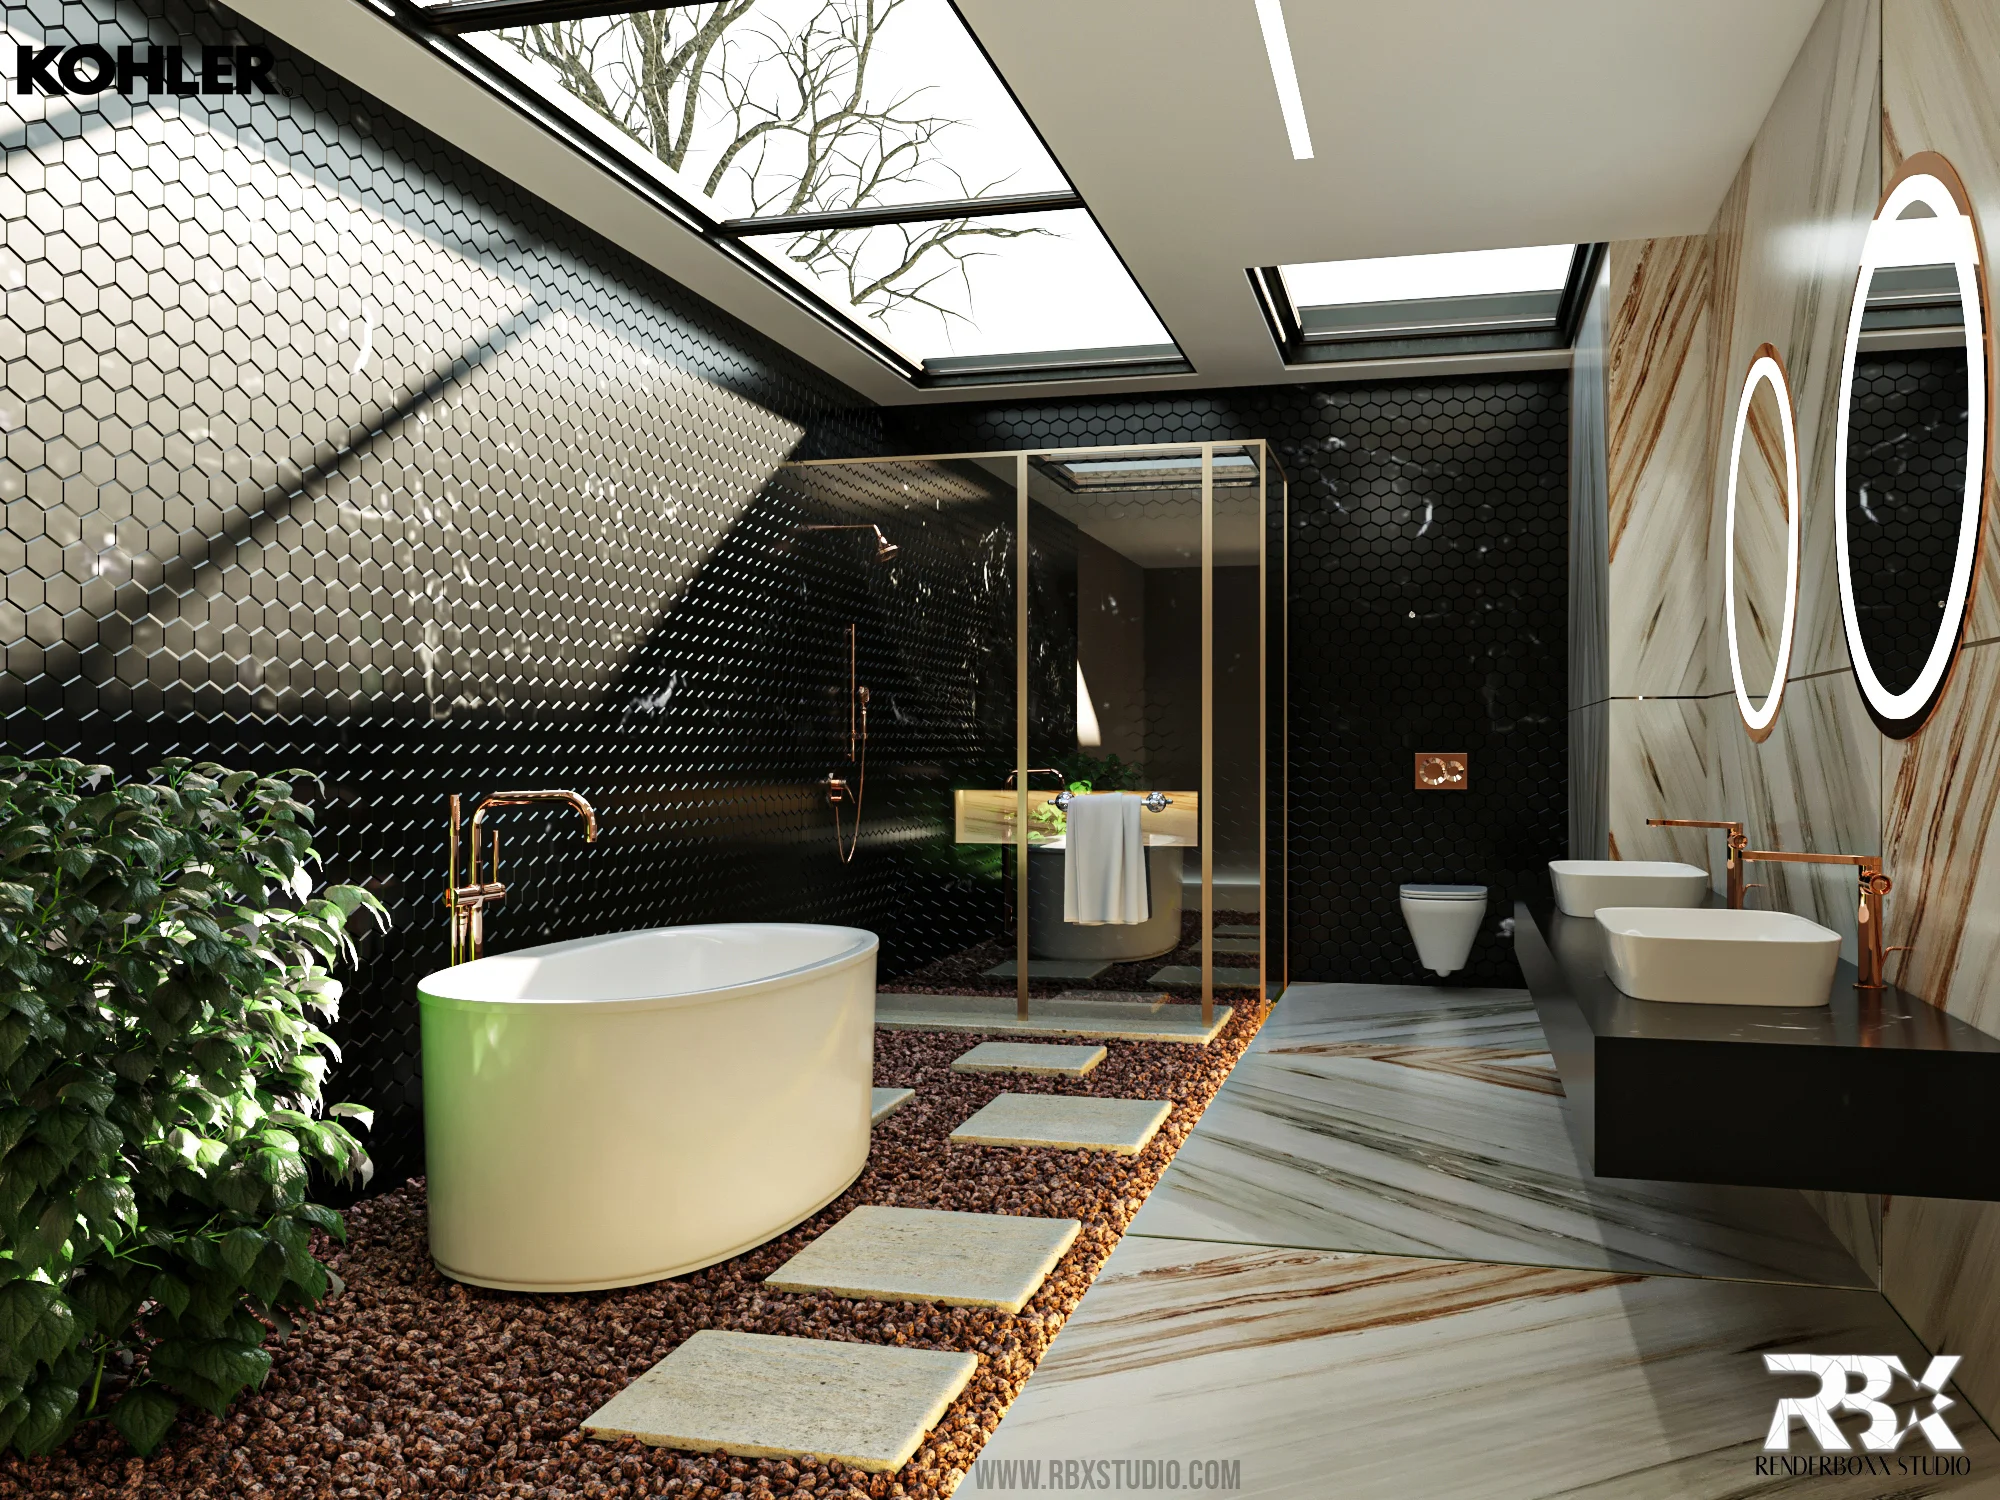 Bathroomd dersigs 3d rendering